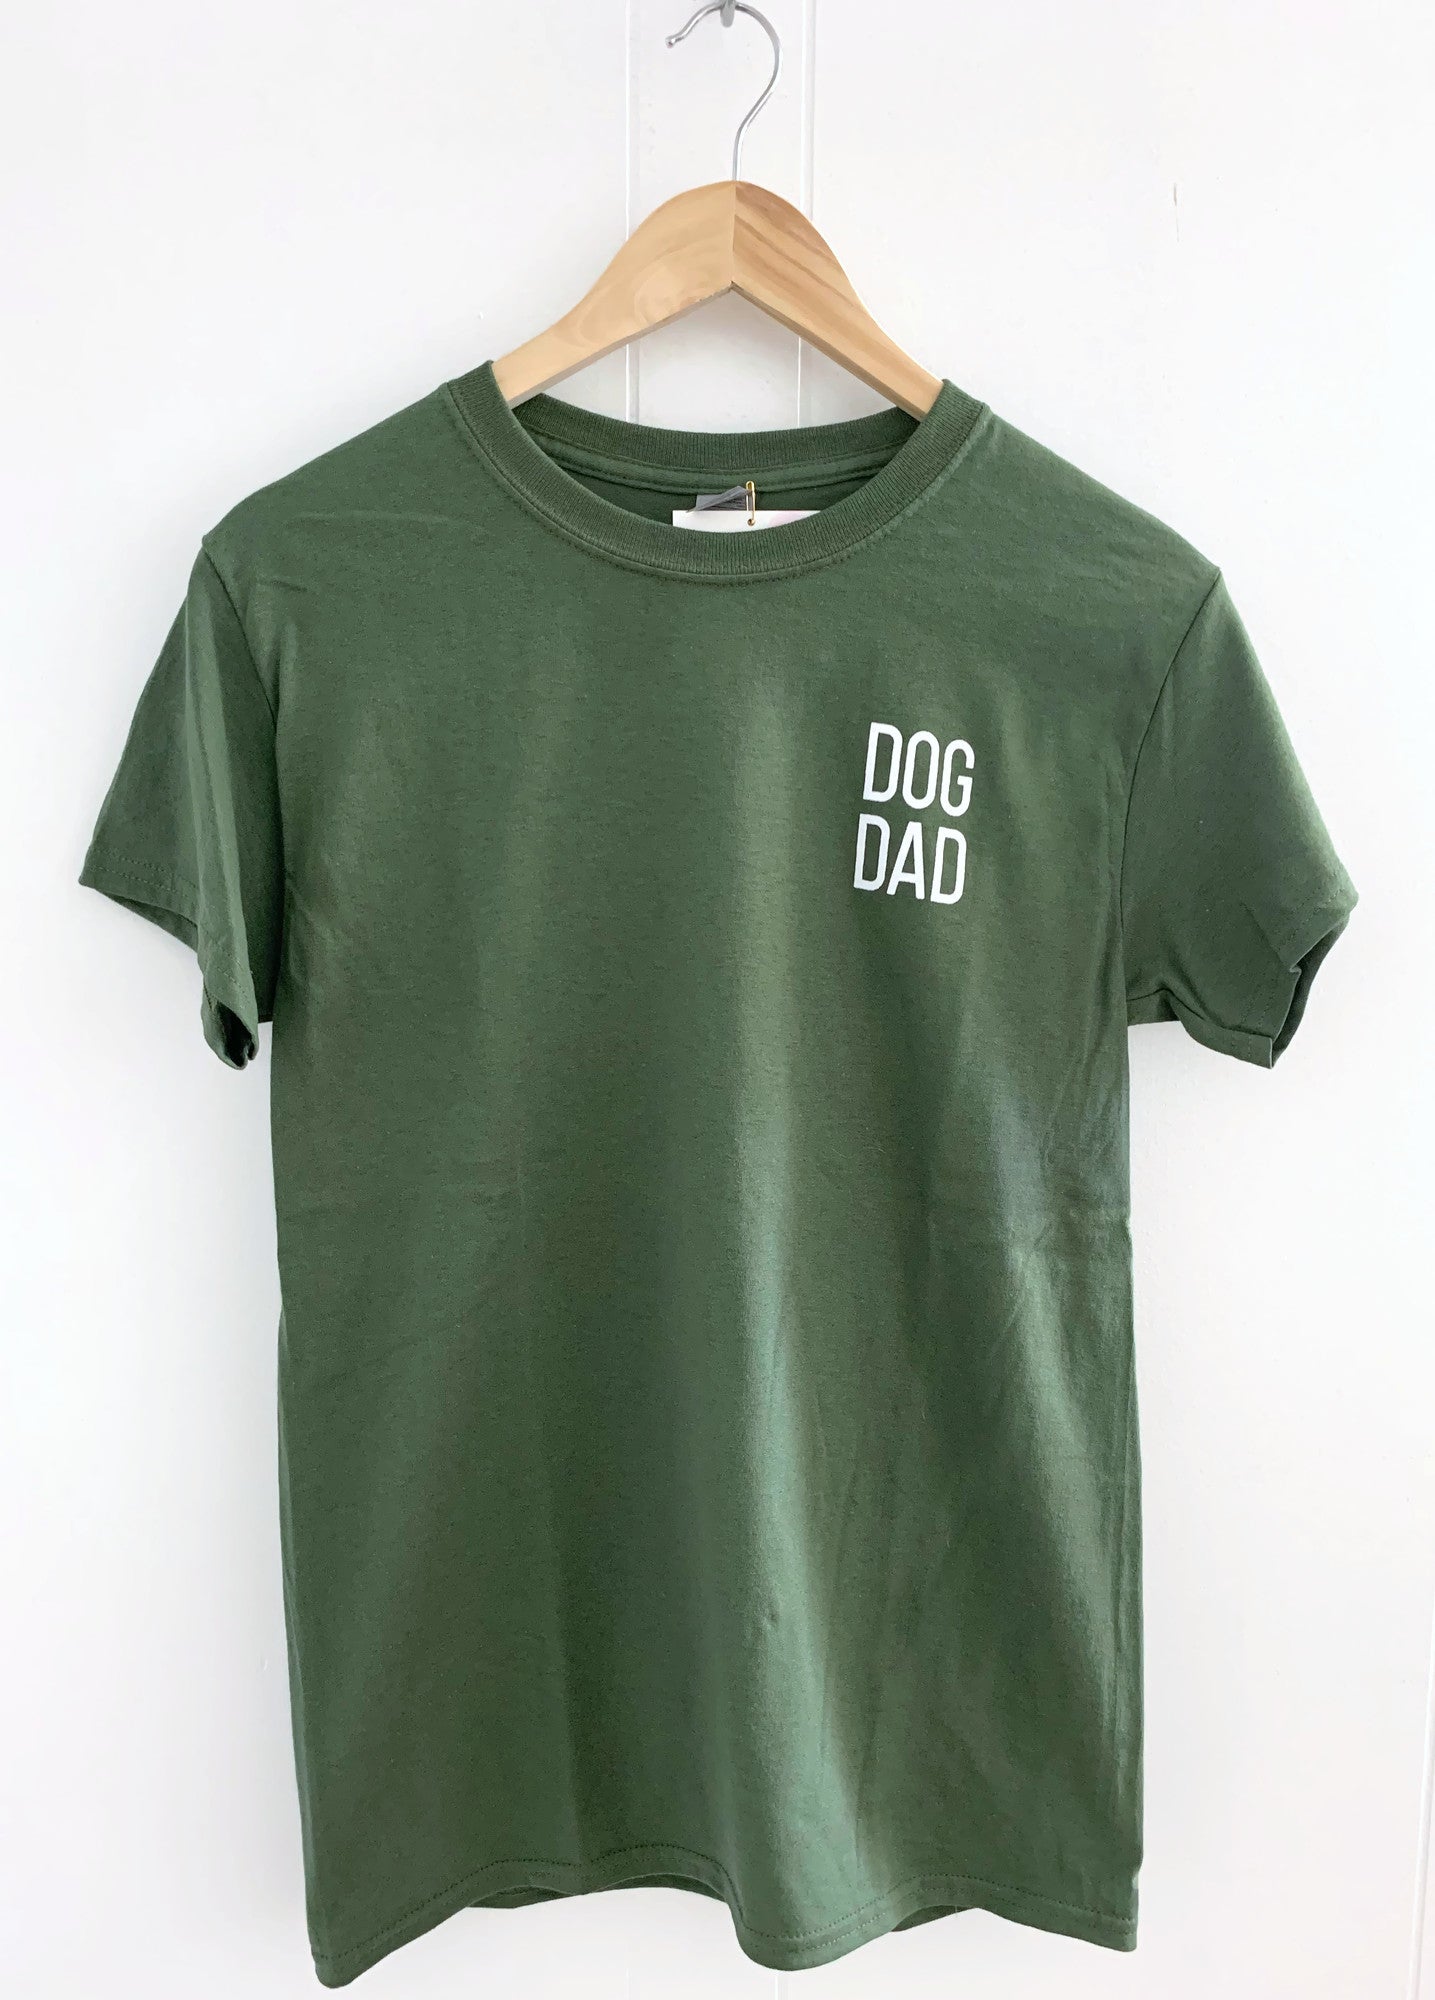 Dog dad t shirt gift for him dog dad af fur dad retro t-shirt minimalist men's clothing